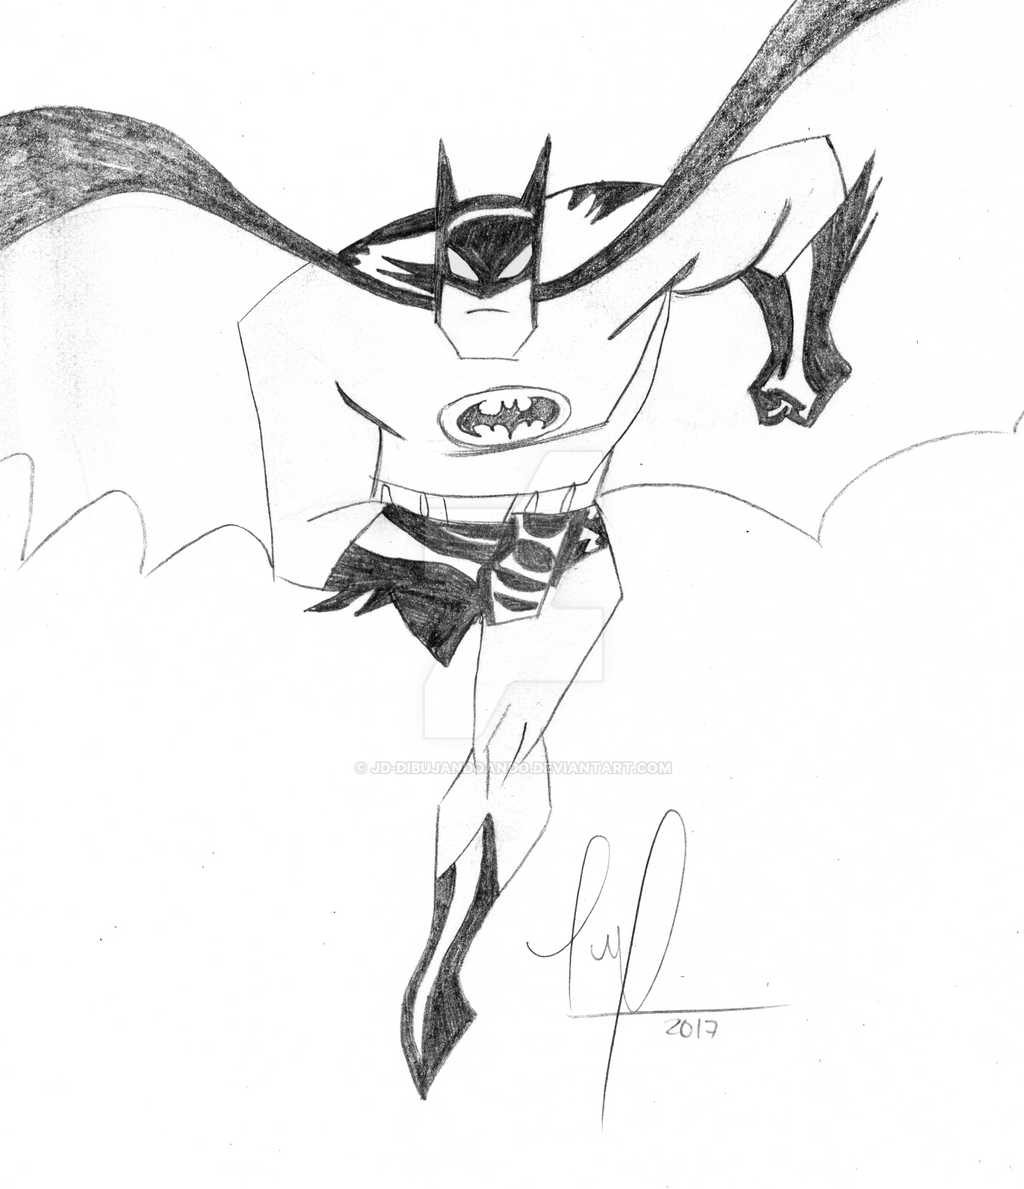 Batman: The Animated Series (Sketch) by jd-dibujandoando on DeviantArt